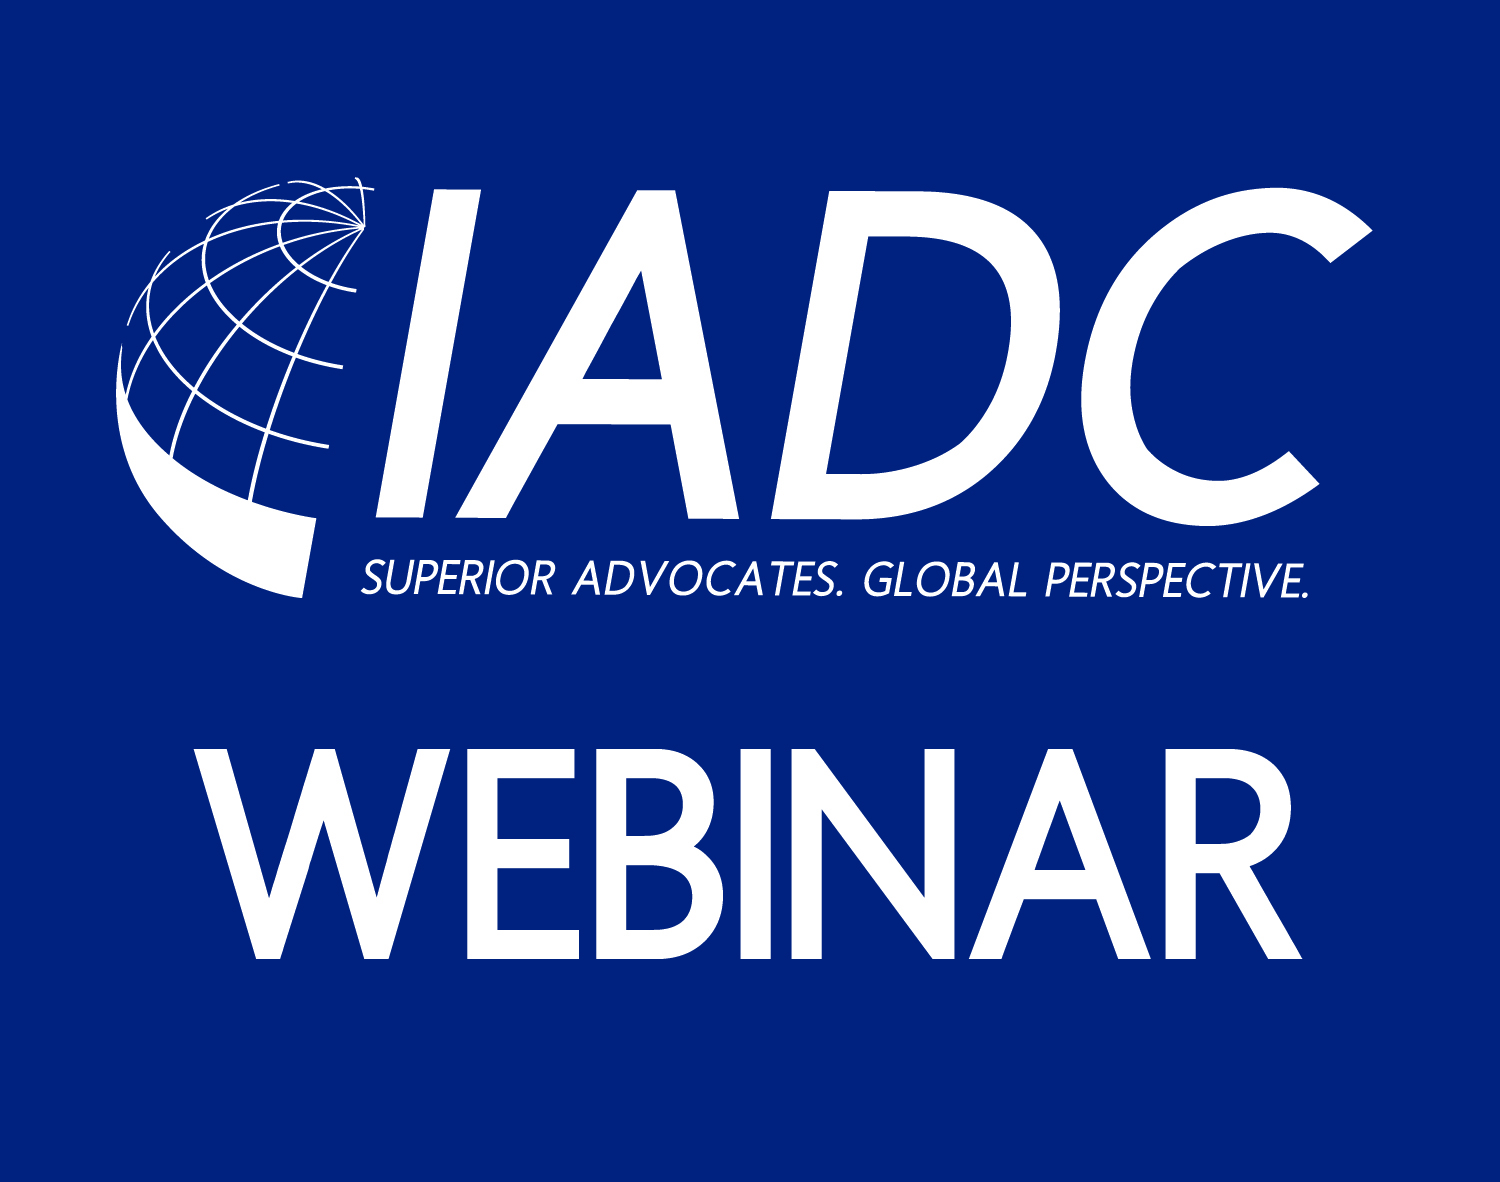 IADC Foundation: Spotlight on iCivics